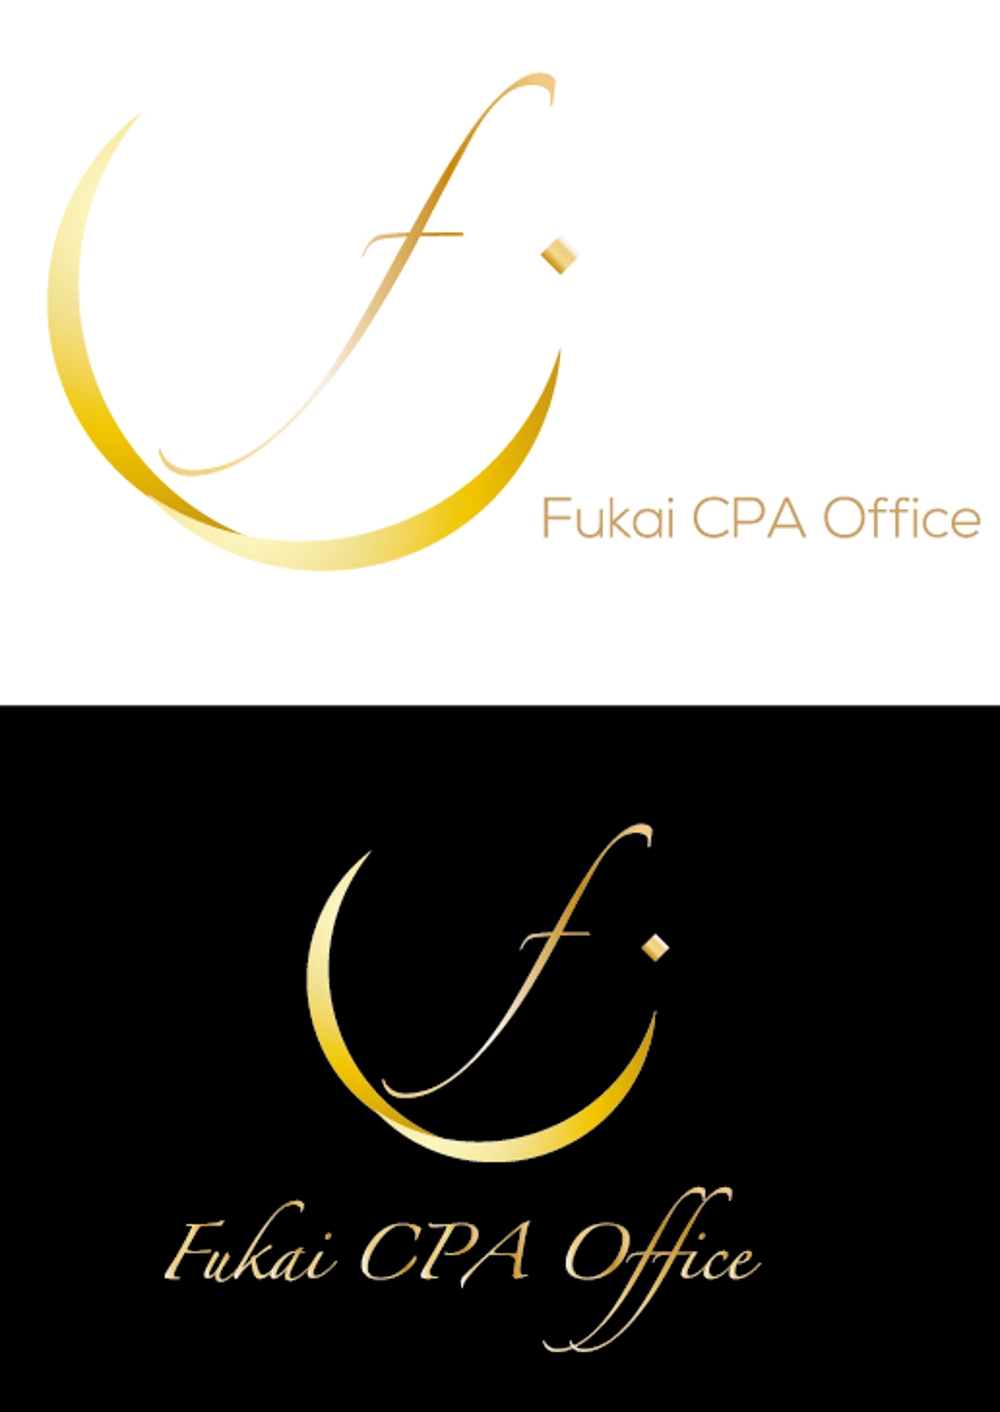 Fukai-CPA-Office.jpg